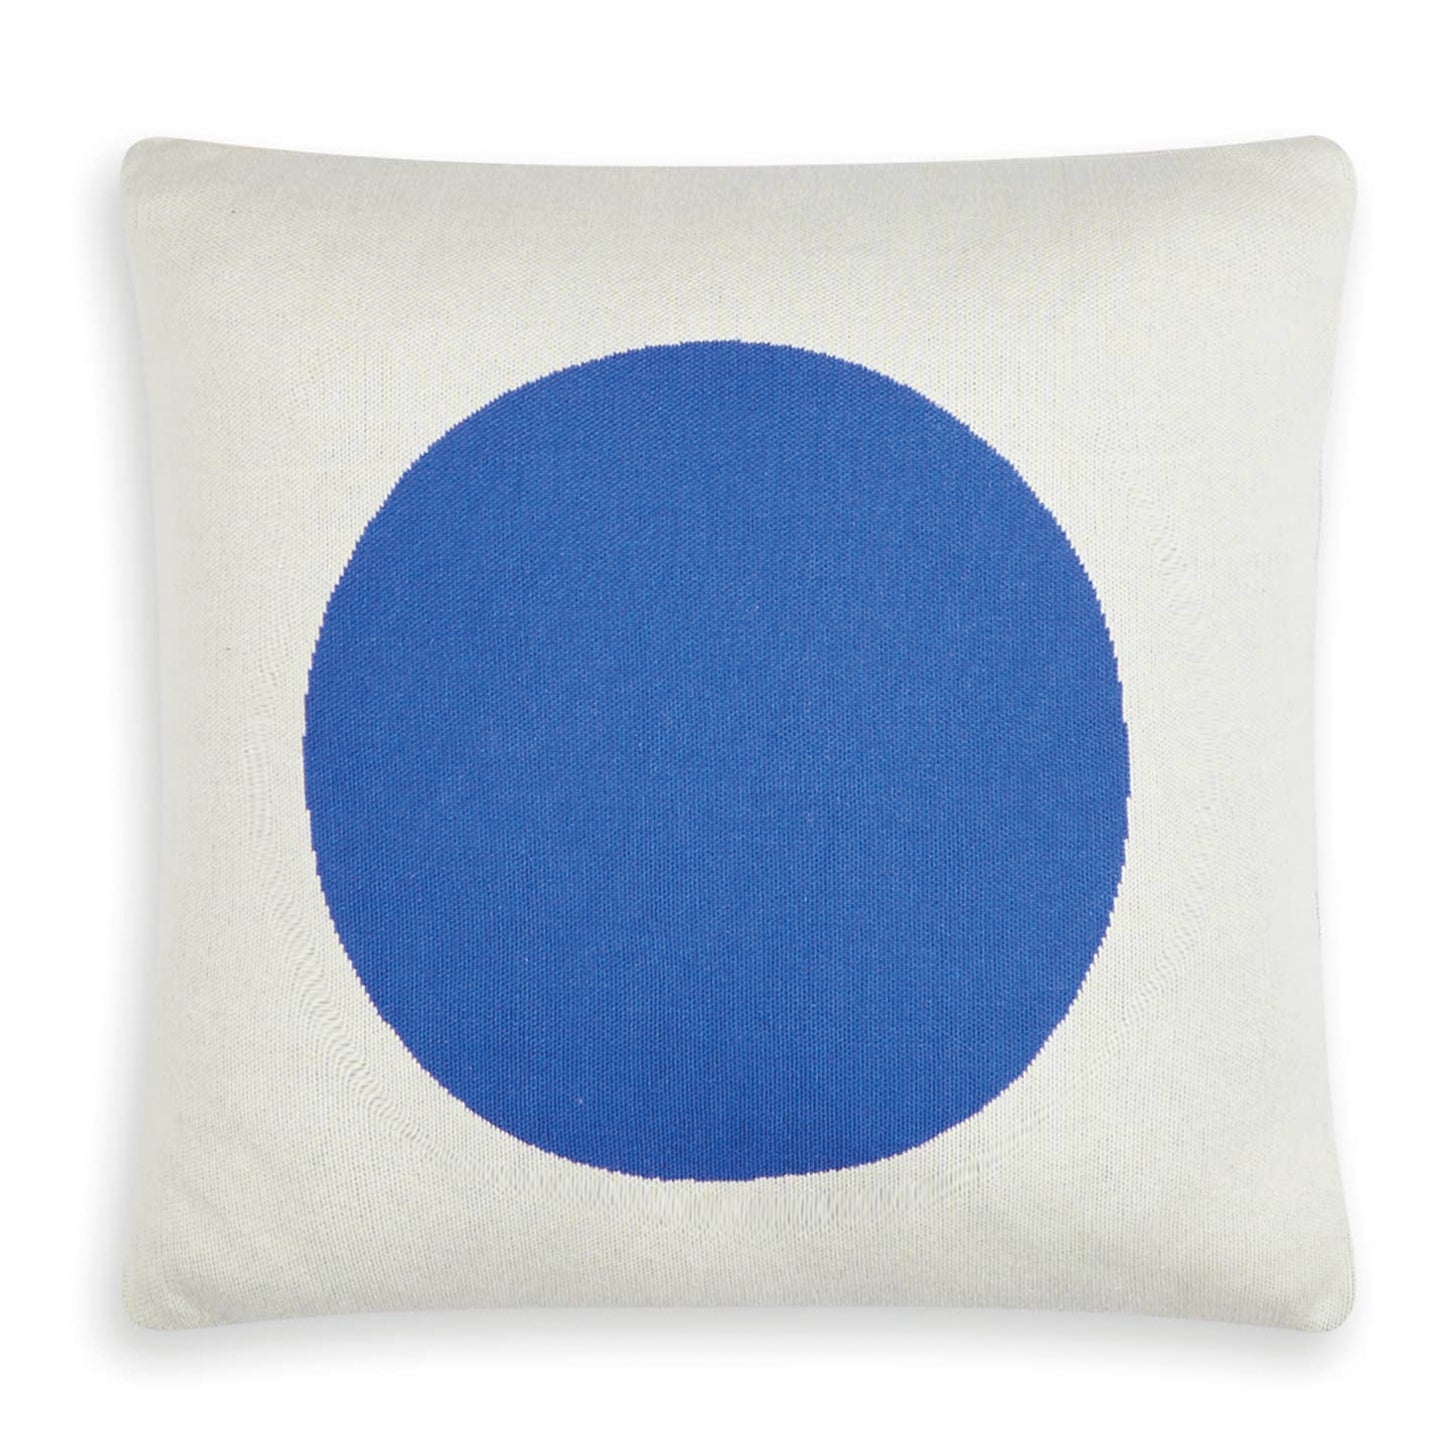 Sophie Home Cotton Knit Throw Pillow/Cushion Cover - Runda Cobalt